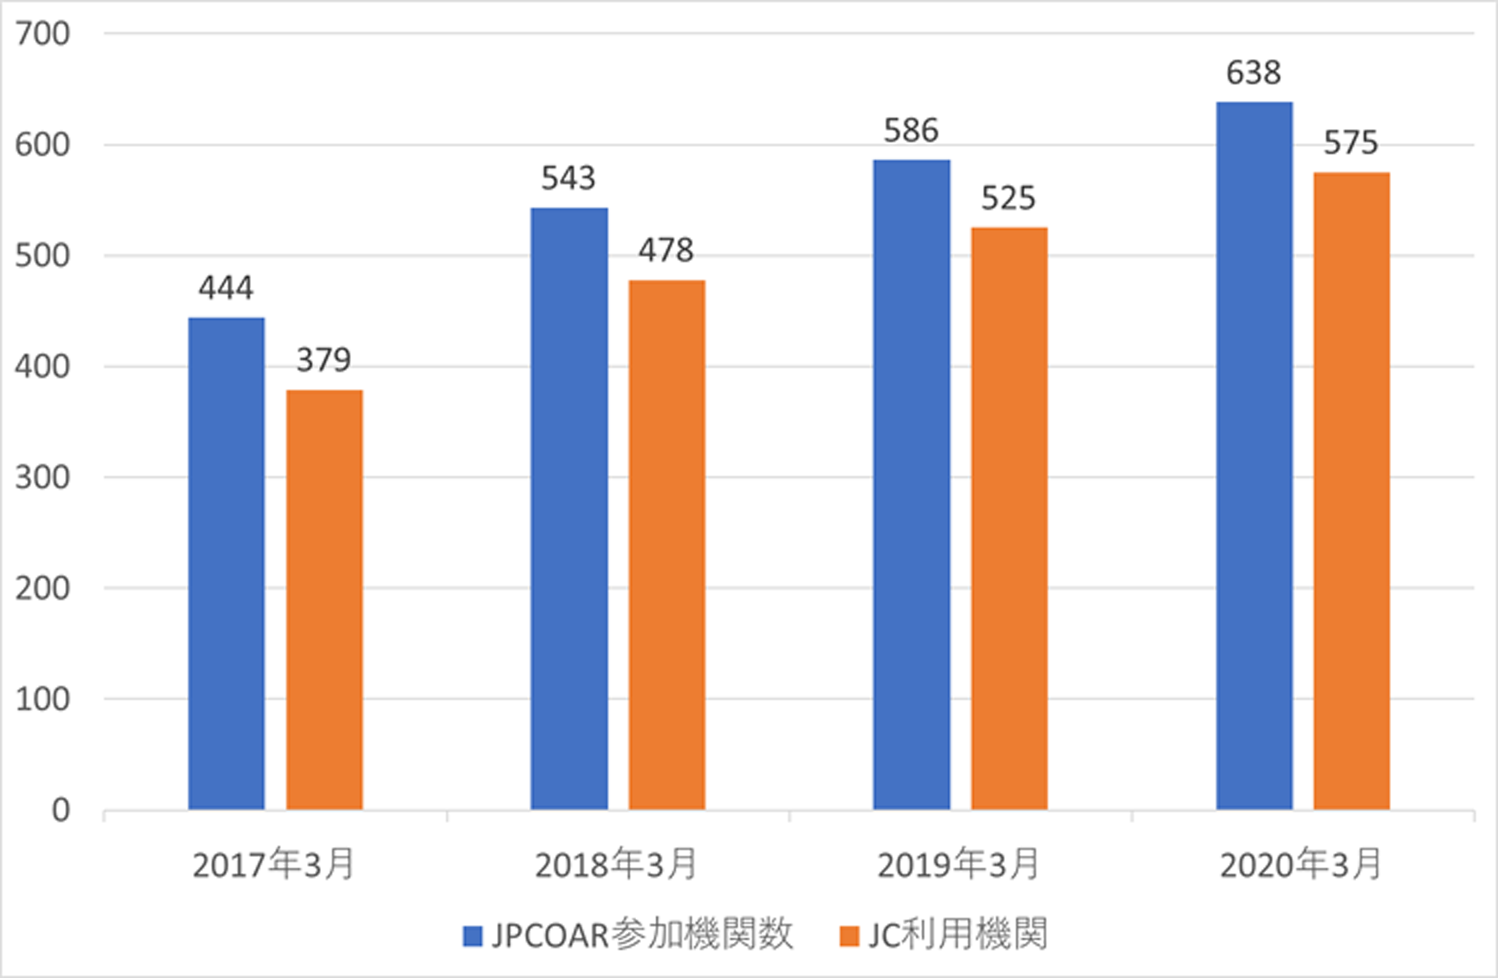 JPCOAR参加機関数の推移　Number of participating institutions in JPCOAR.